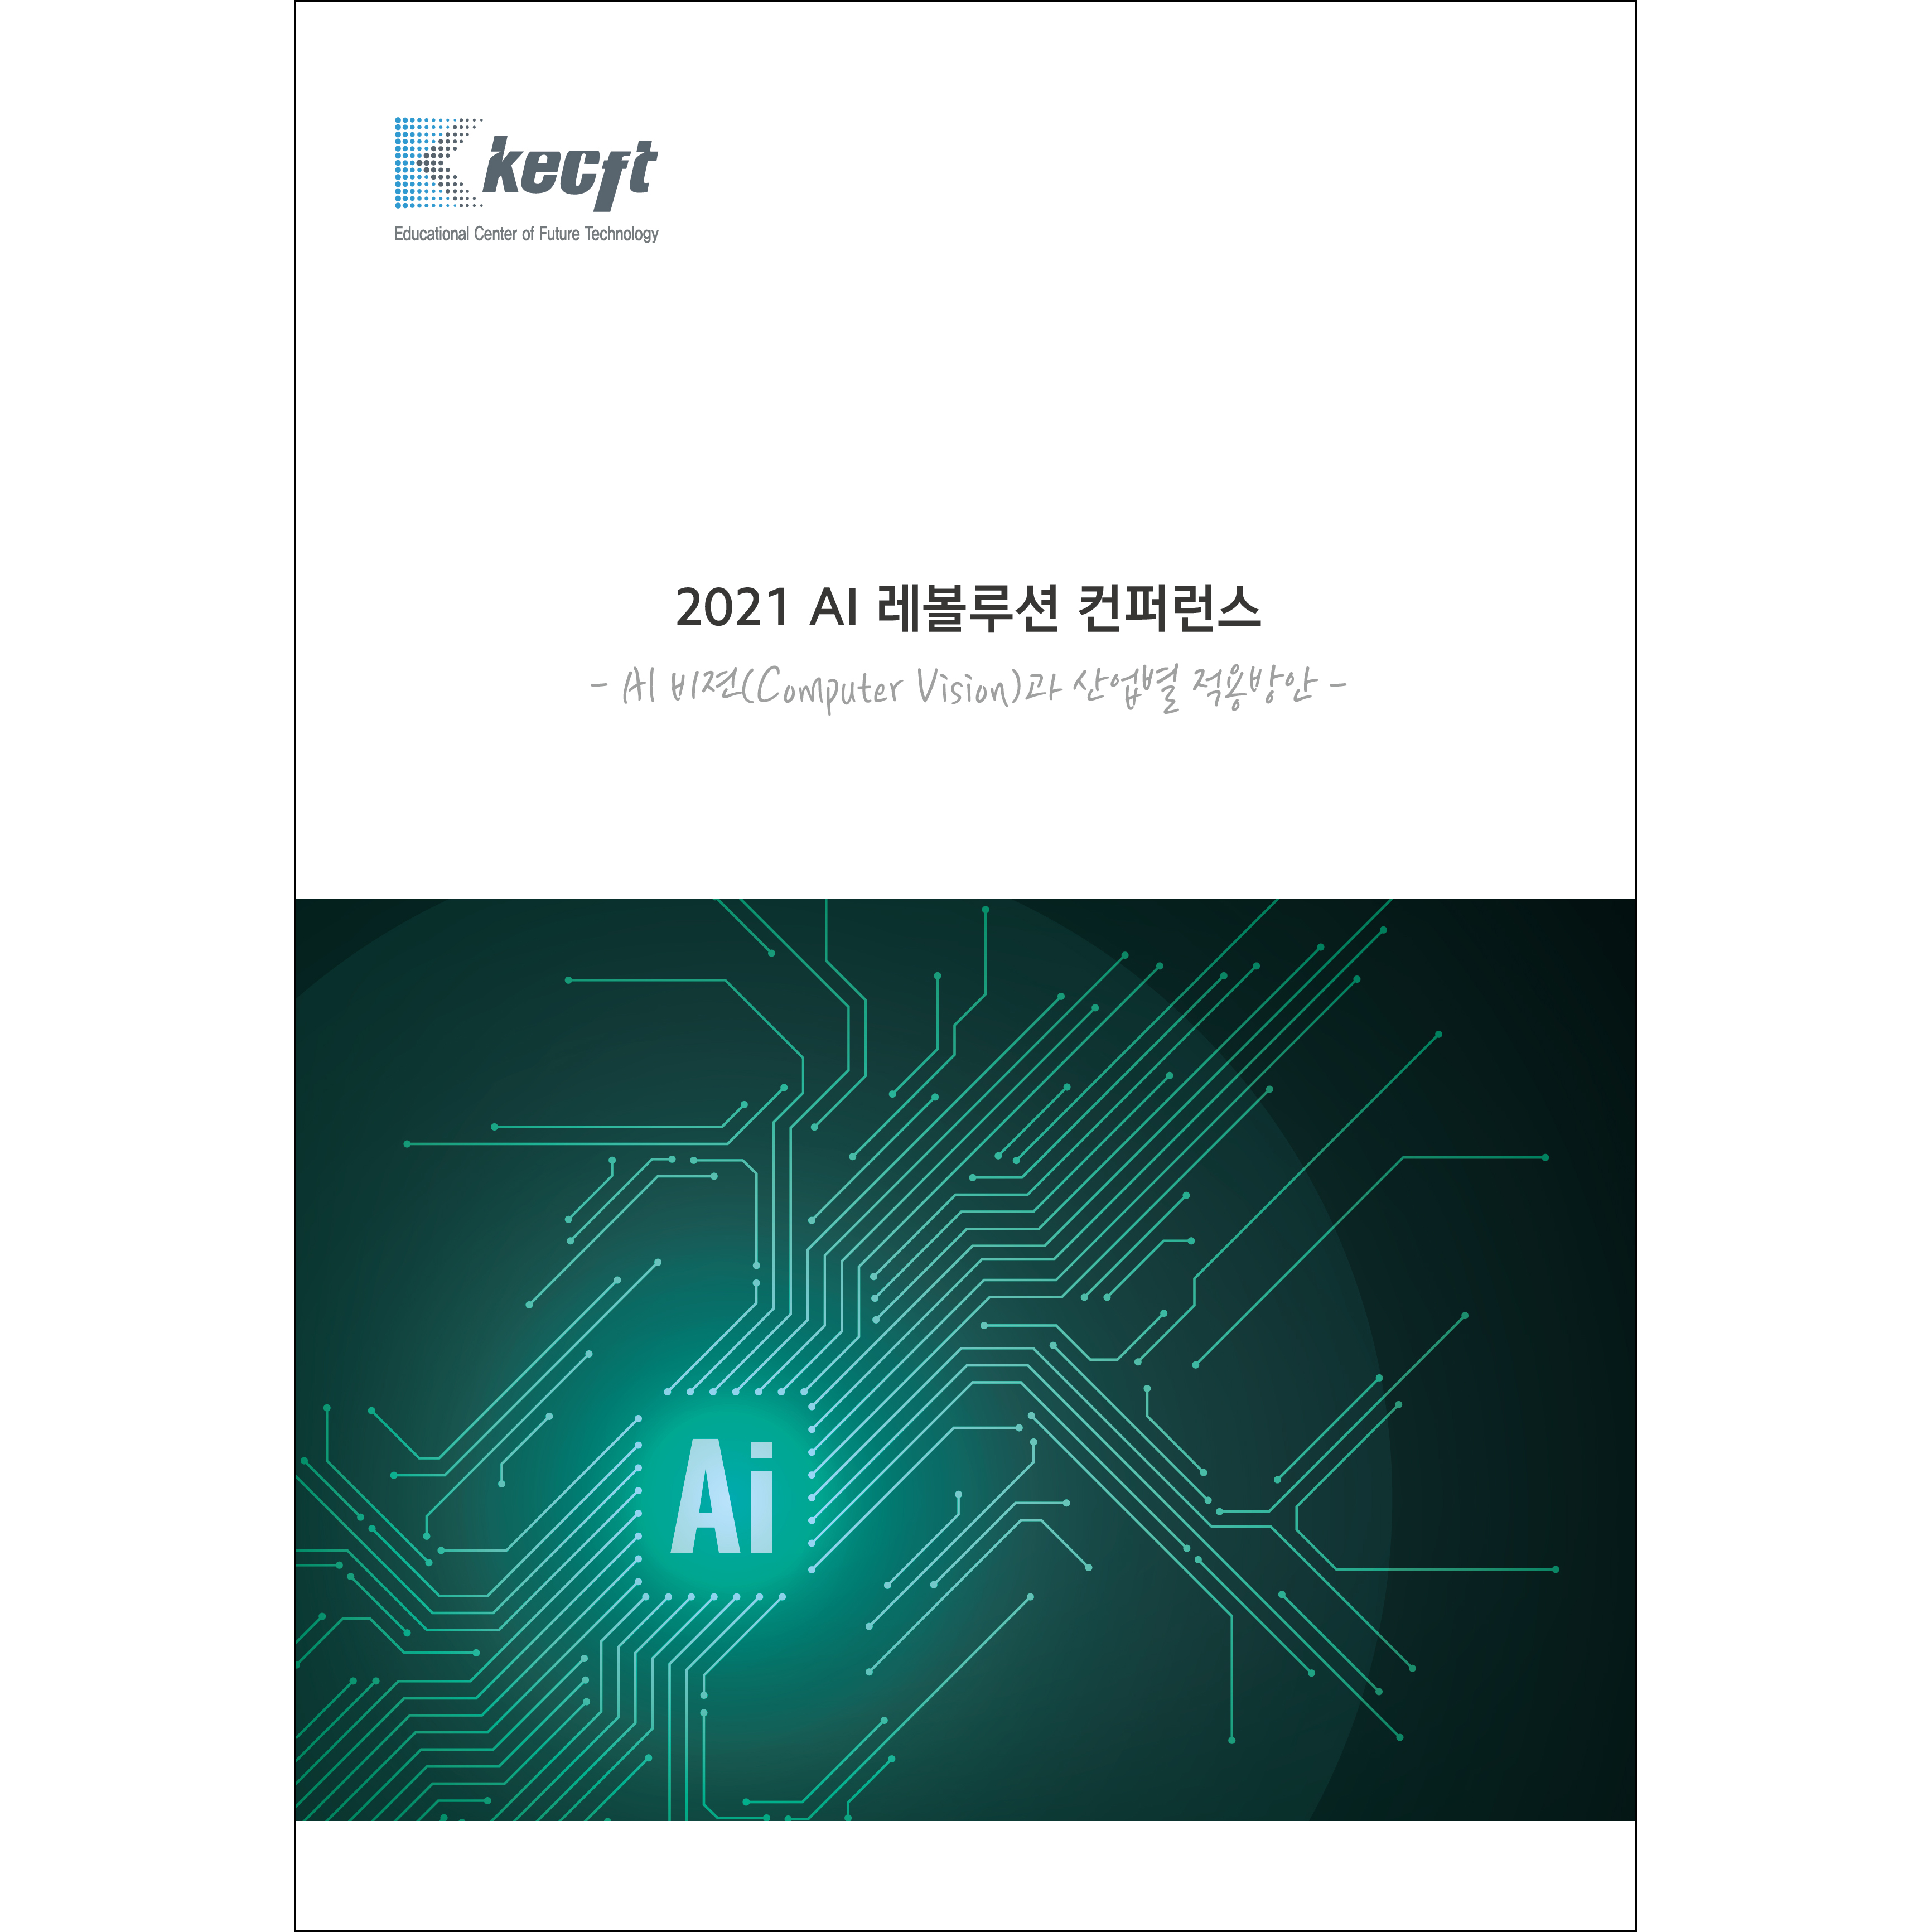 AI 비젼(Computer Vision)과 산업별 적용방안